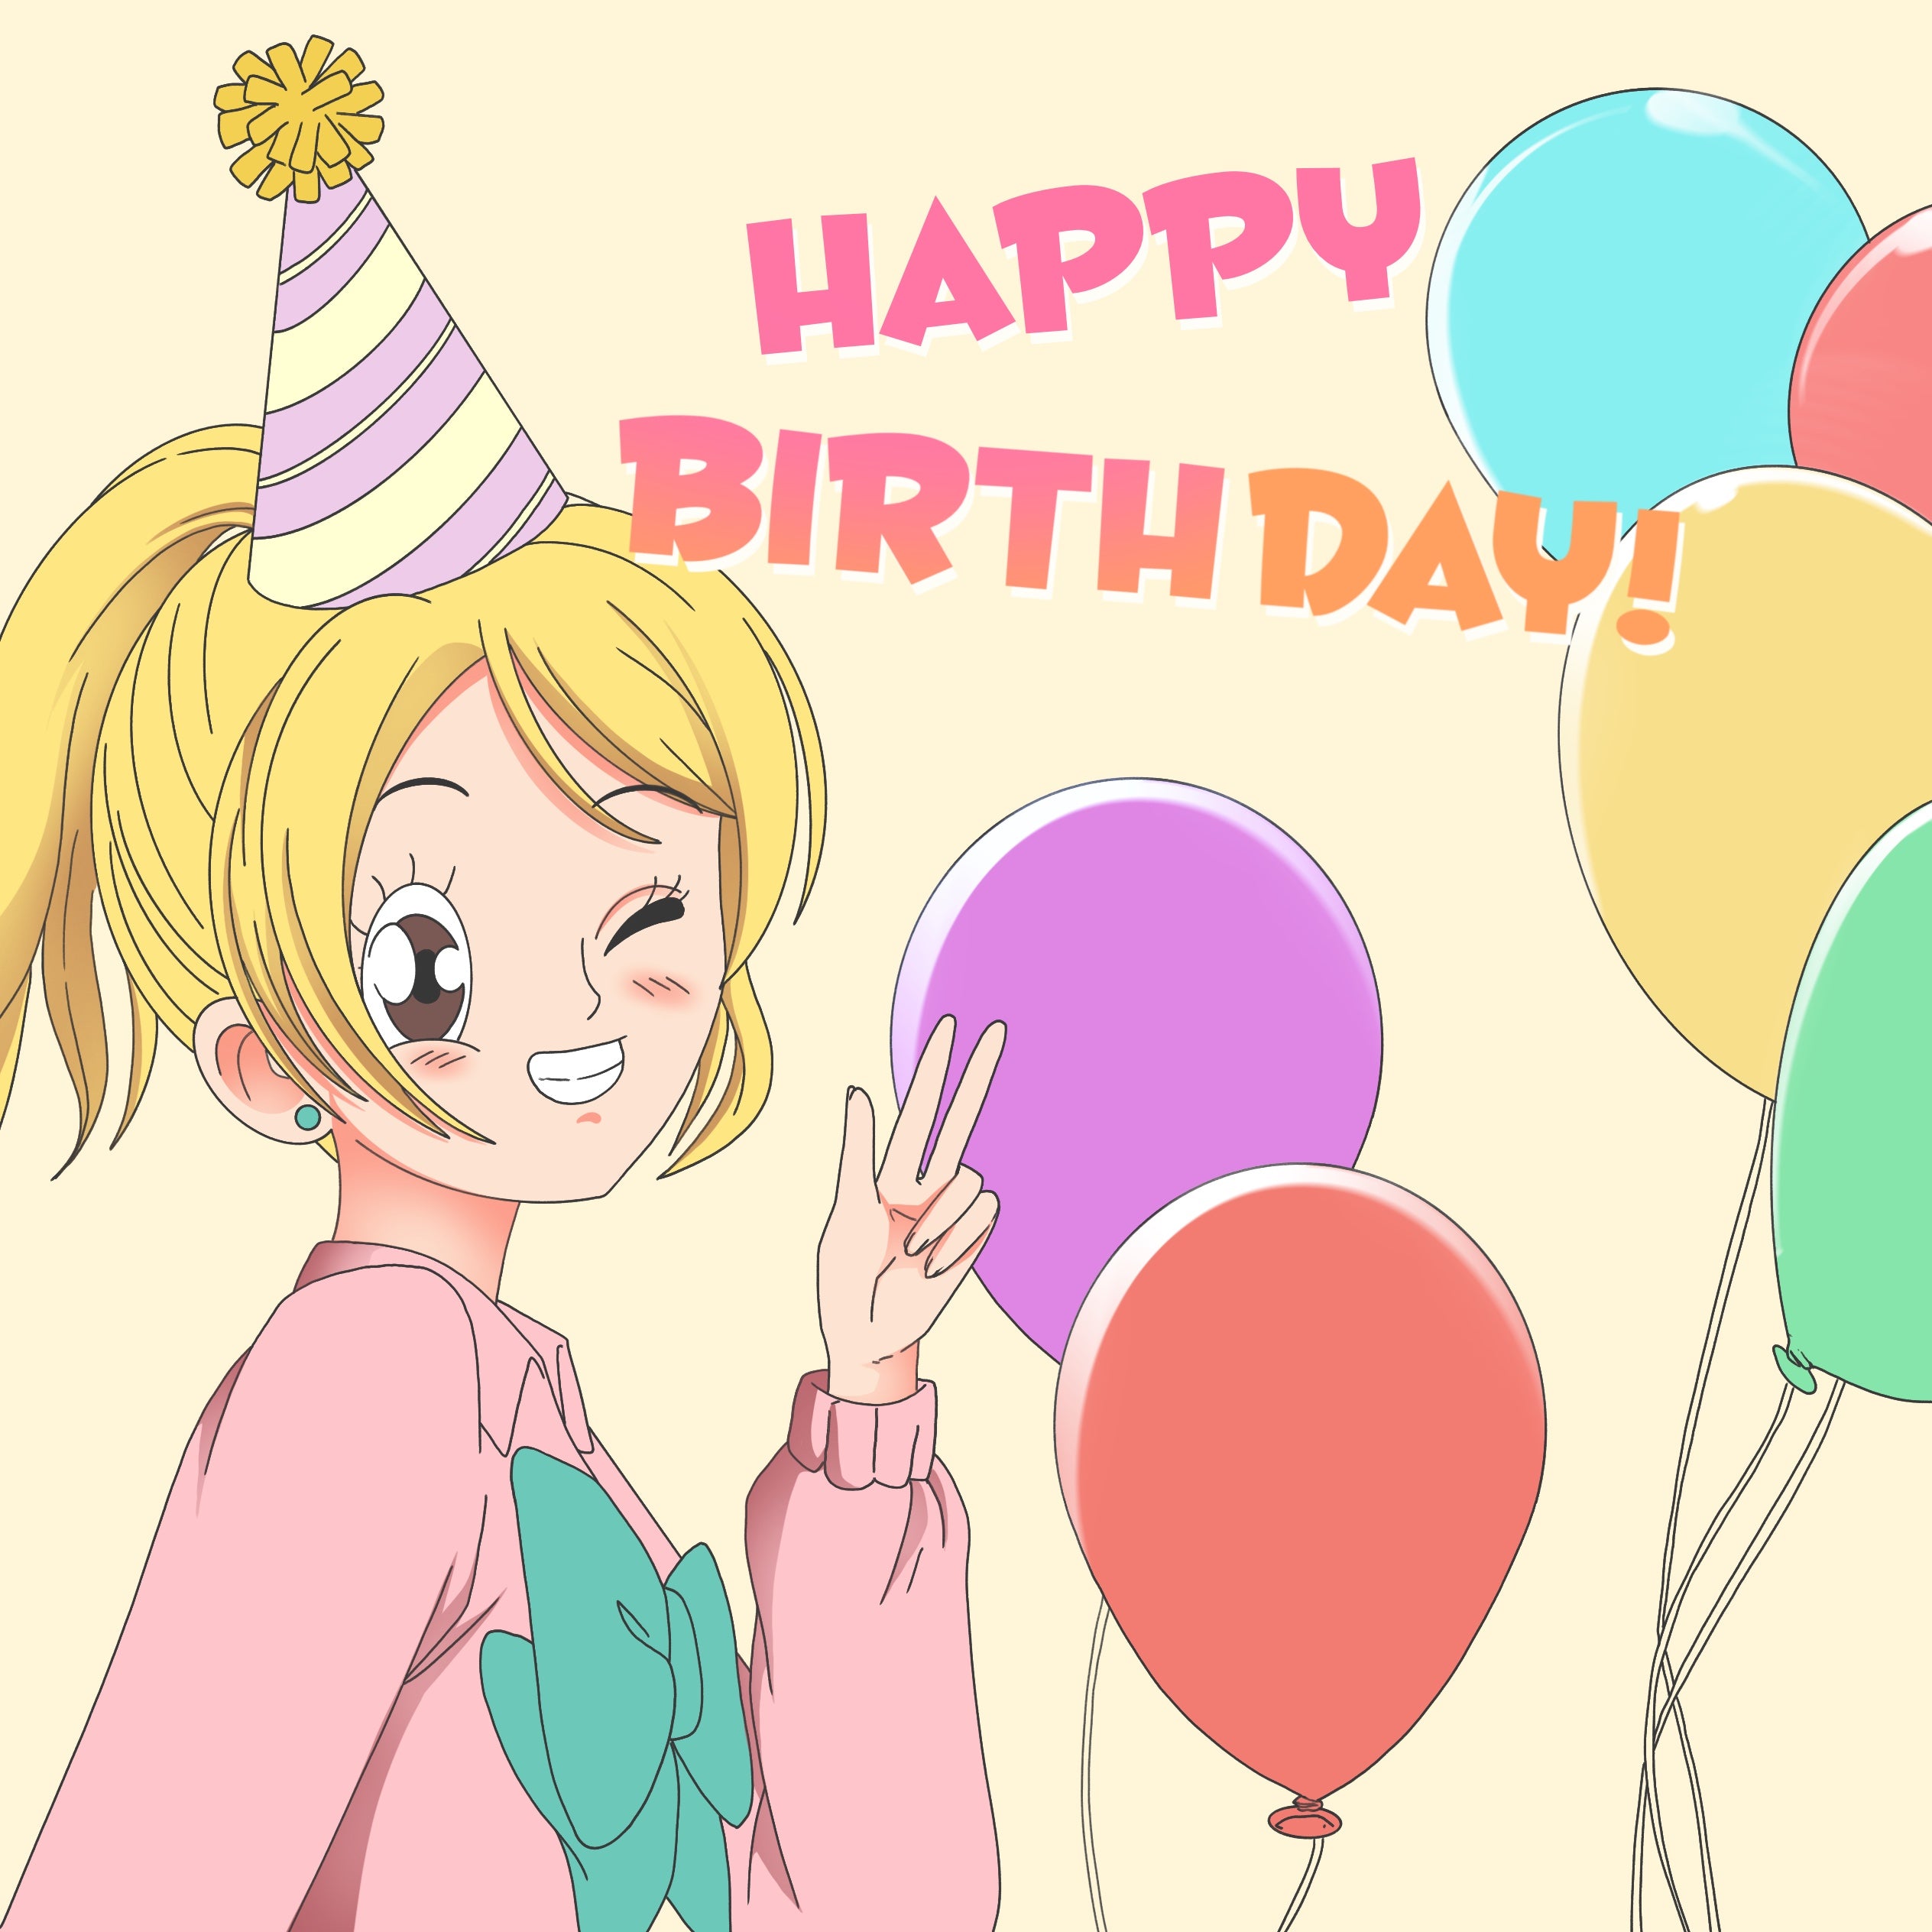 anime birthday wishes